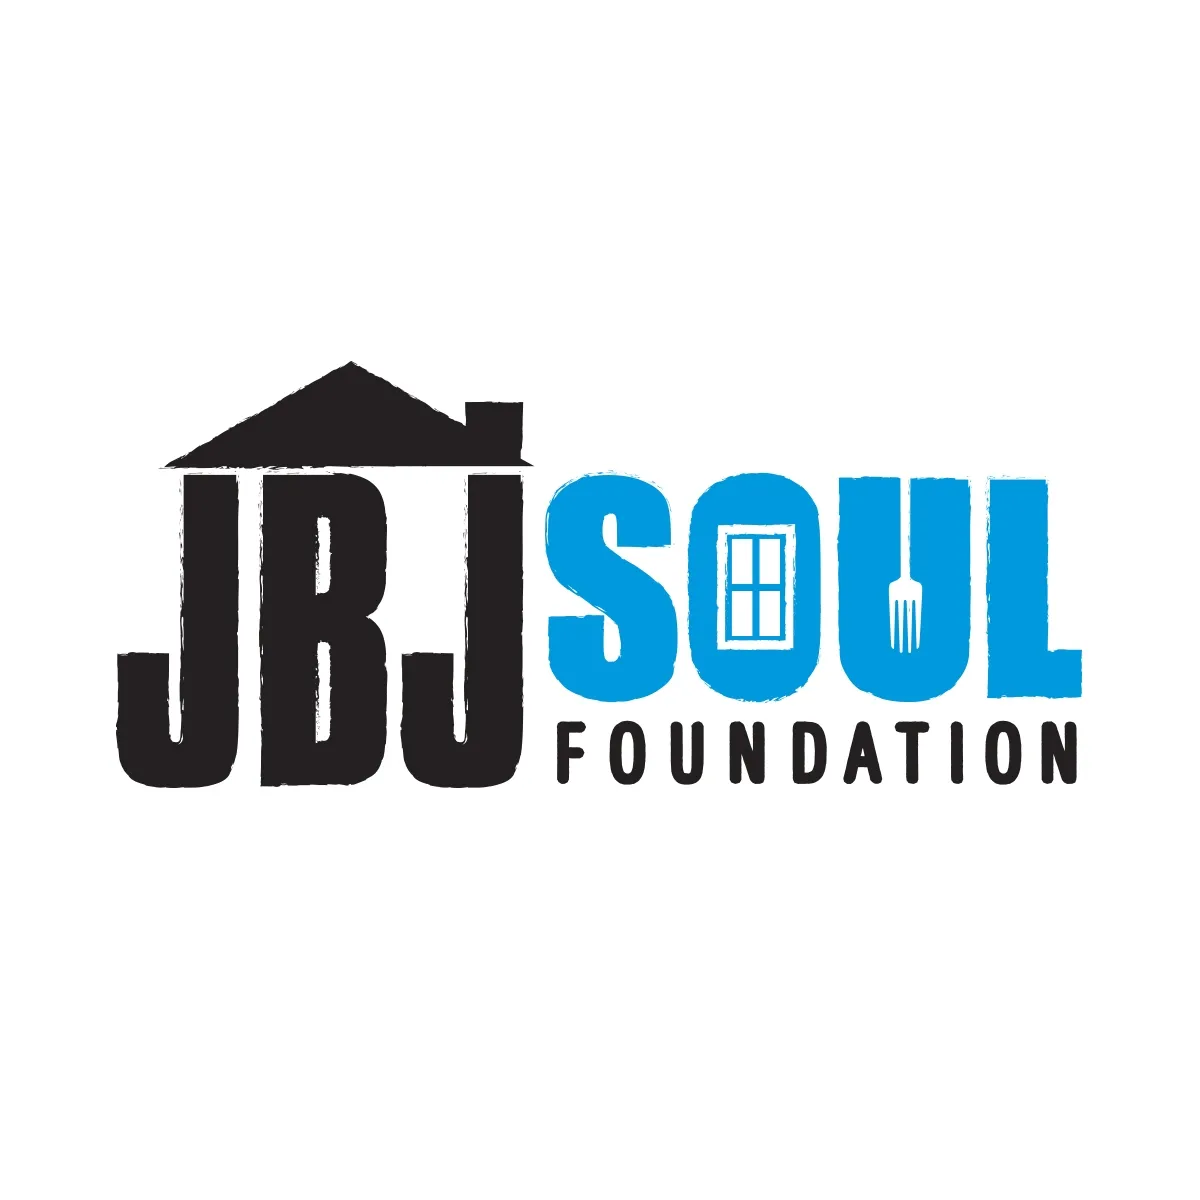 jbj soul foundation